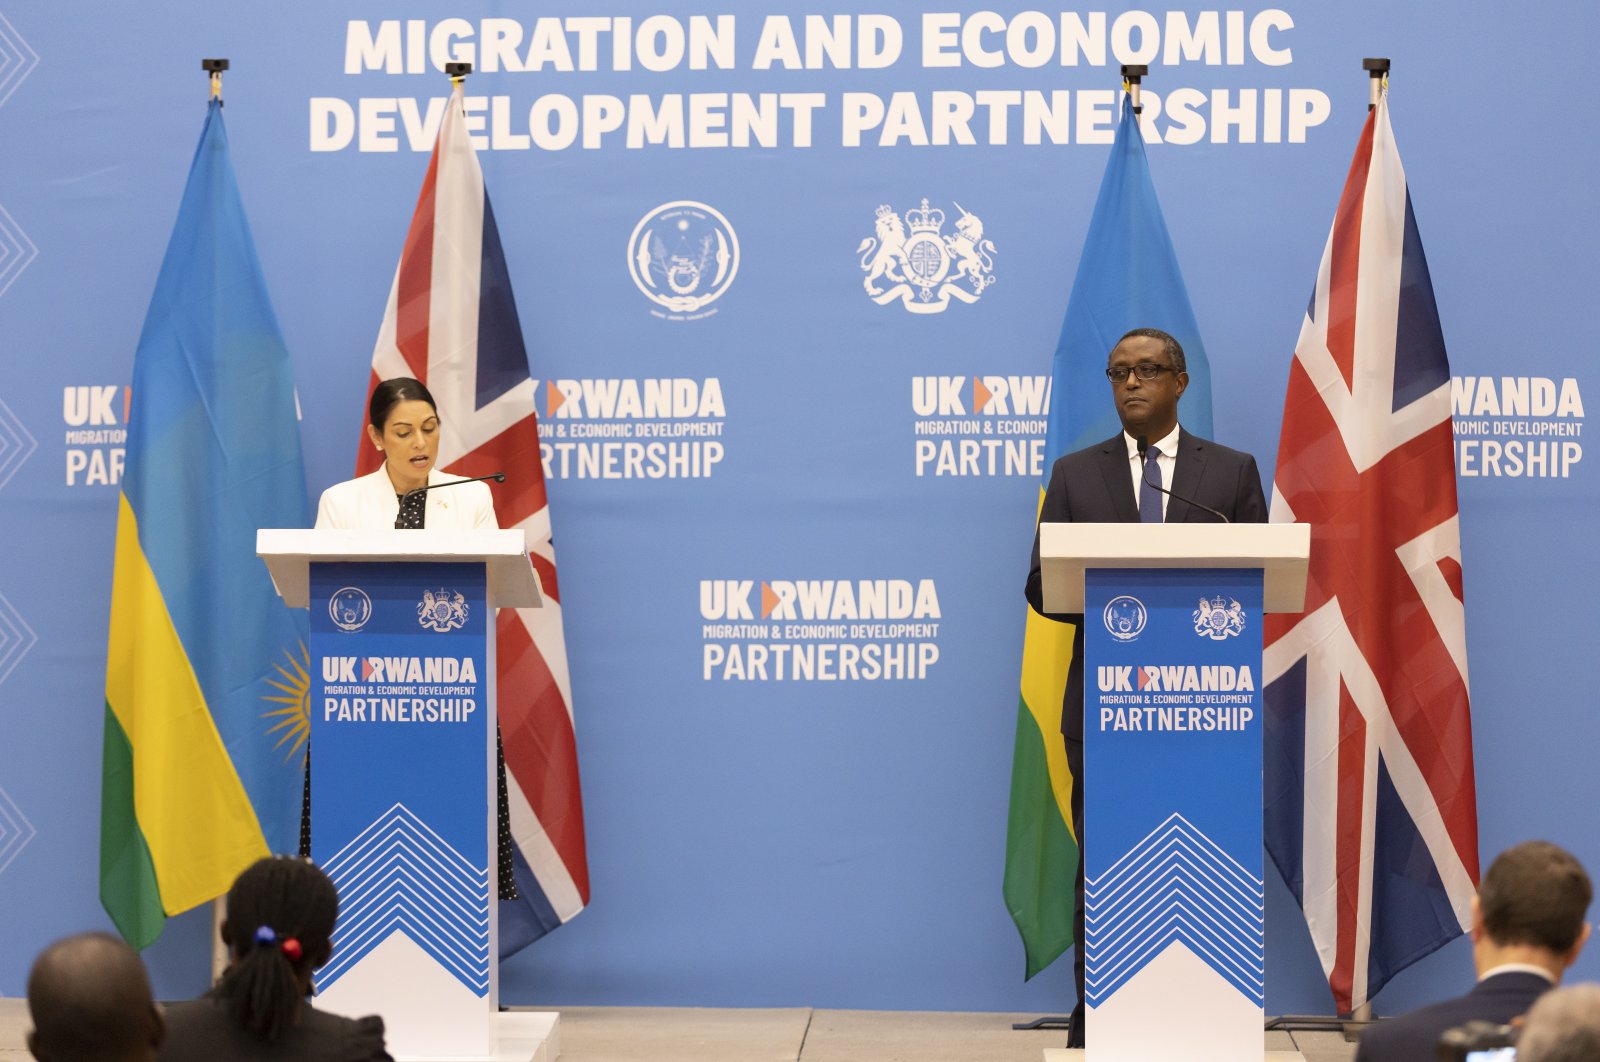 British Home Secretary Priti Patel (L) addresses a press conference with Rwandan Foreign Minister Vincent Biruta during a signing ceremony regarding a migration and economic development partnership between the U.K. and Rwanda in Kigali, Rwanda, April 14, 2022. (EPA Photo)